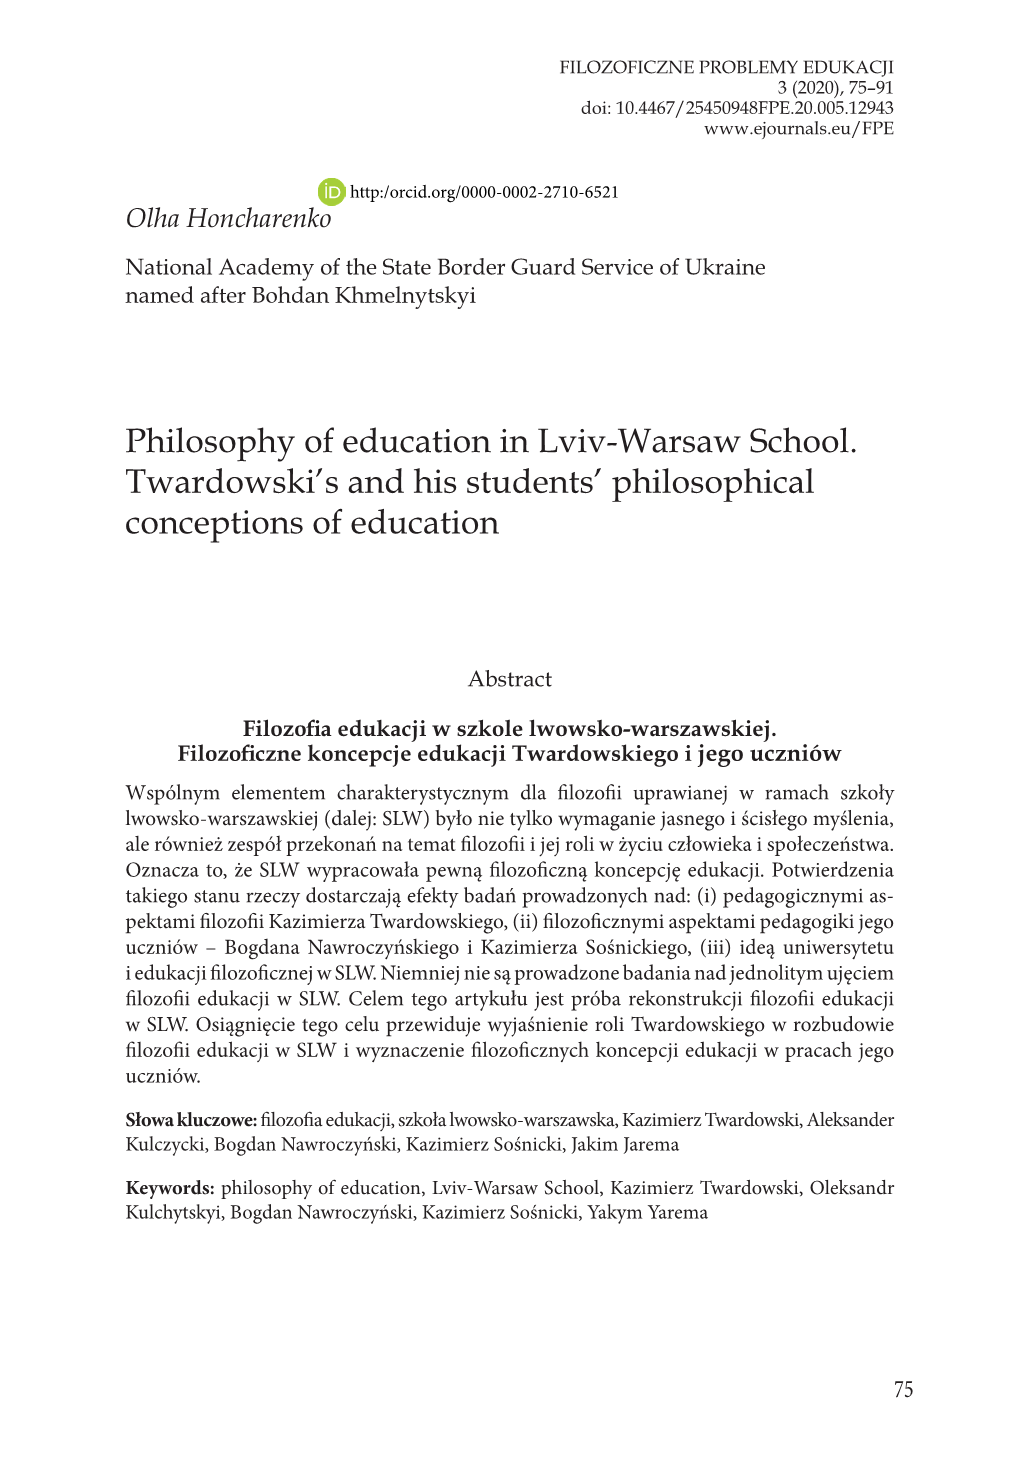 Philosophy of Education in Lviv-Warsaw School. Twardowski's